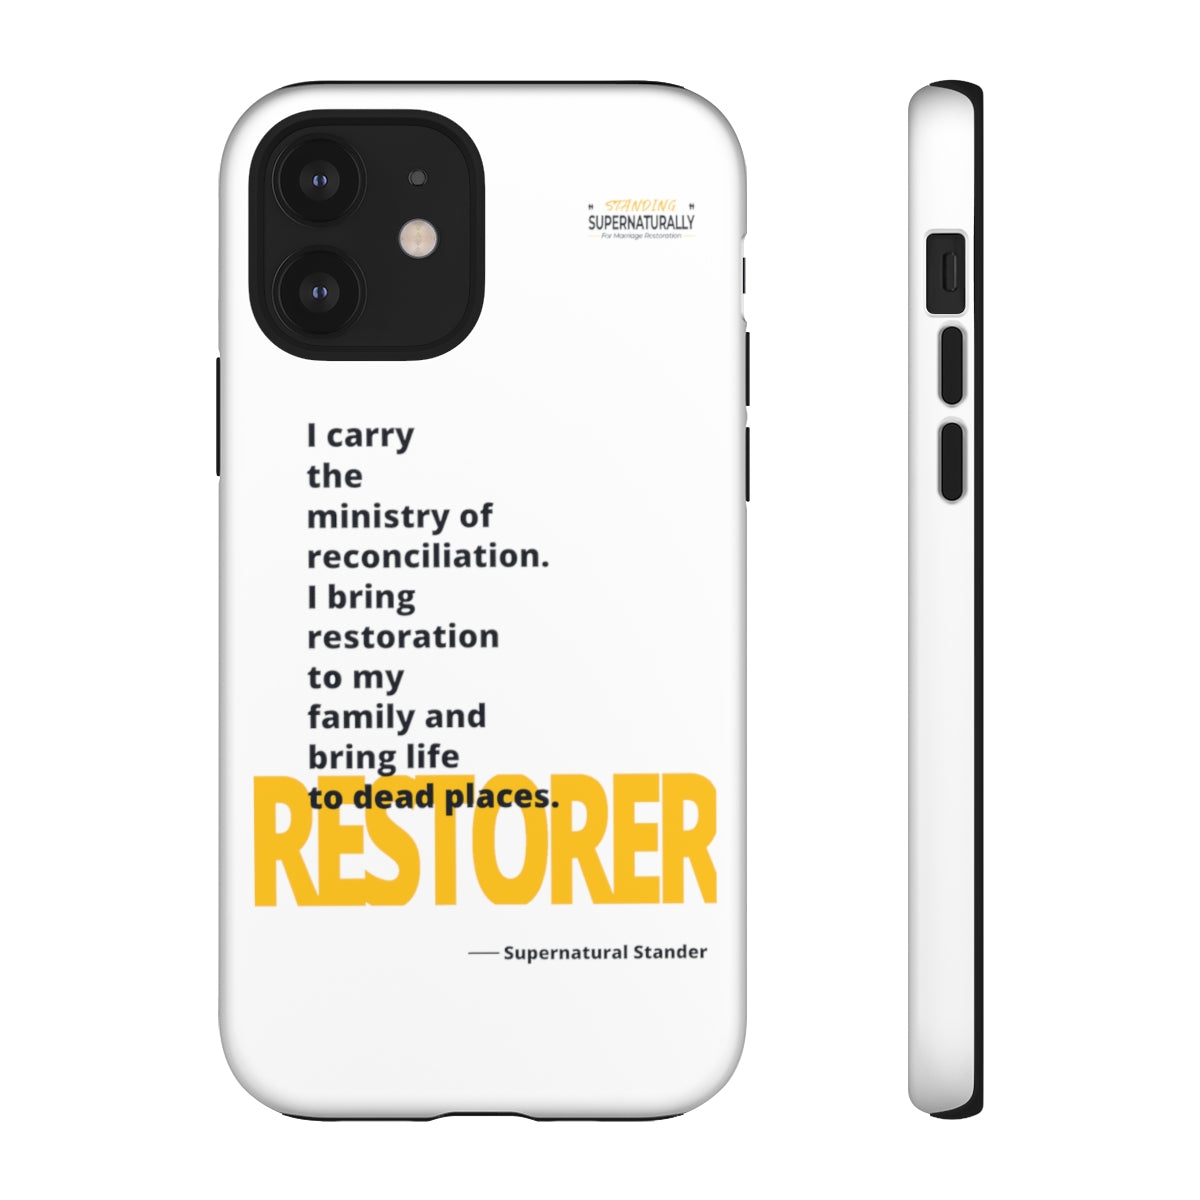 iPhone Case - "Restorer"